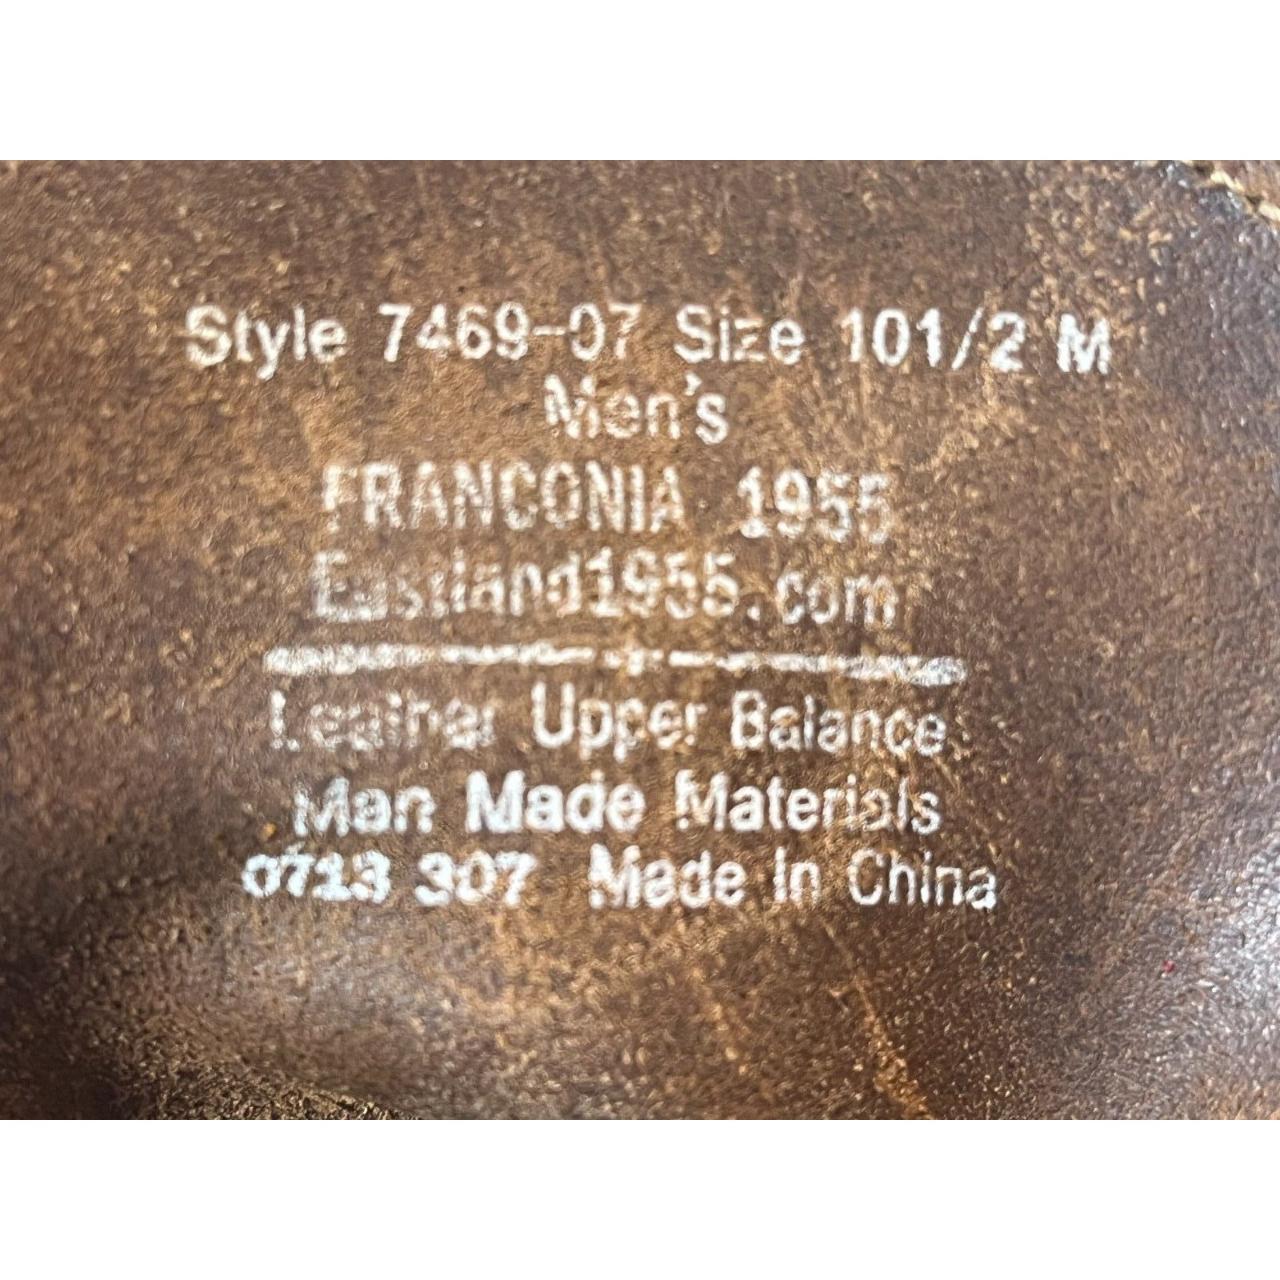 Eastland Men's Size 10.5 Franconia 1955 Boot RARE... - Depop